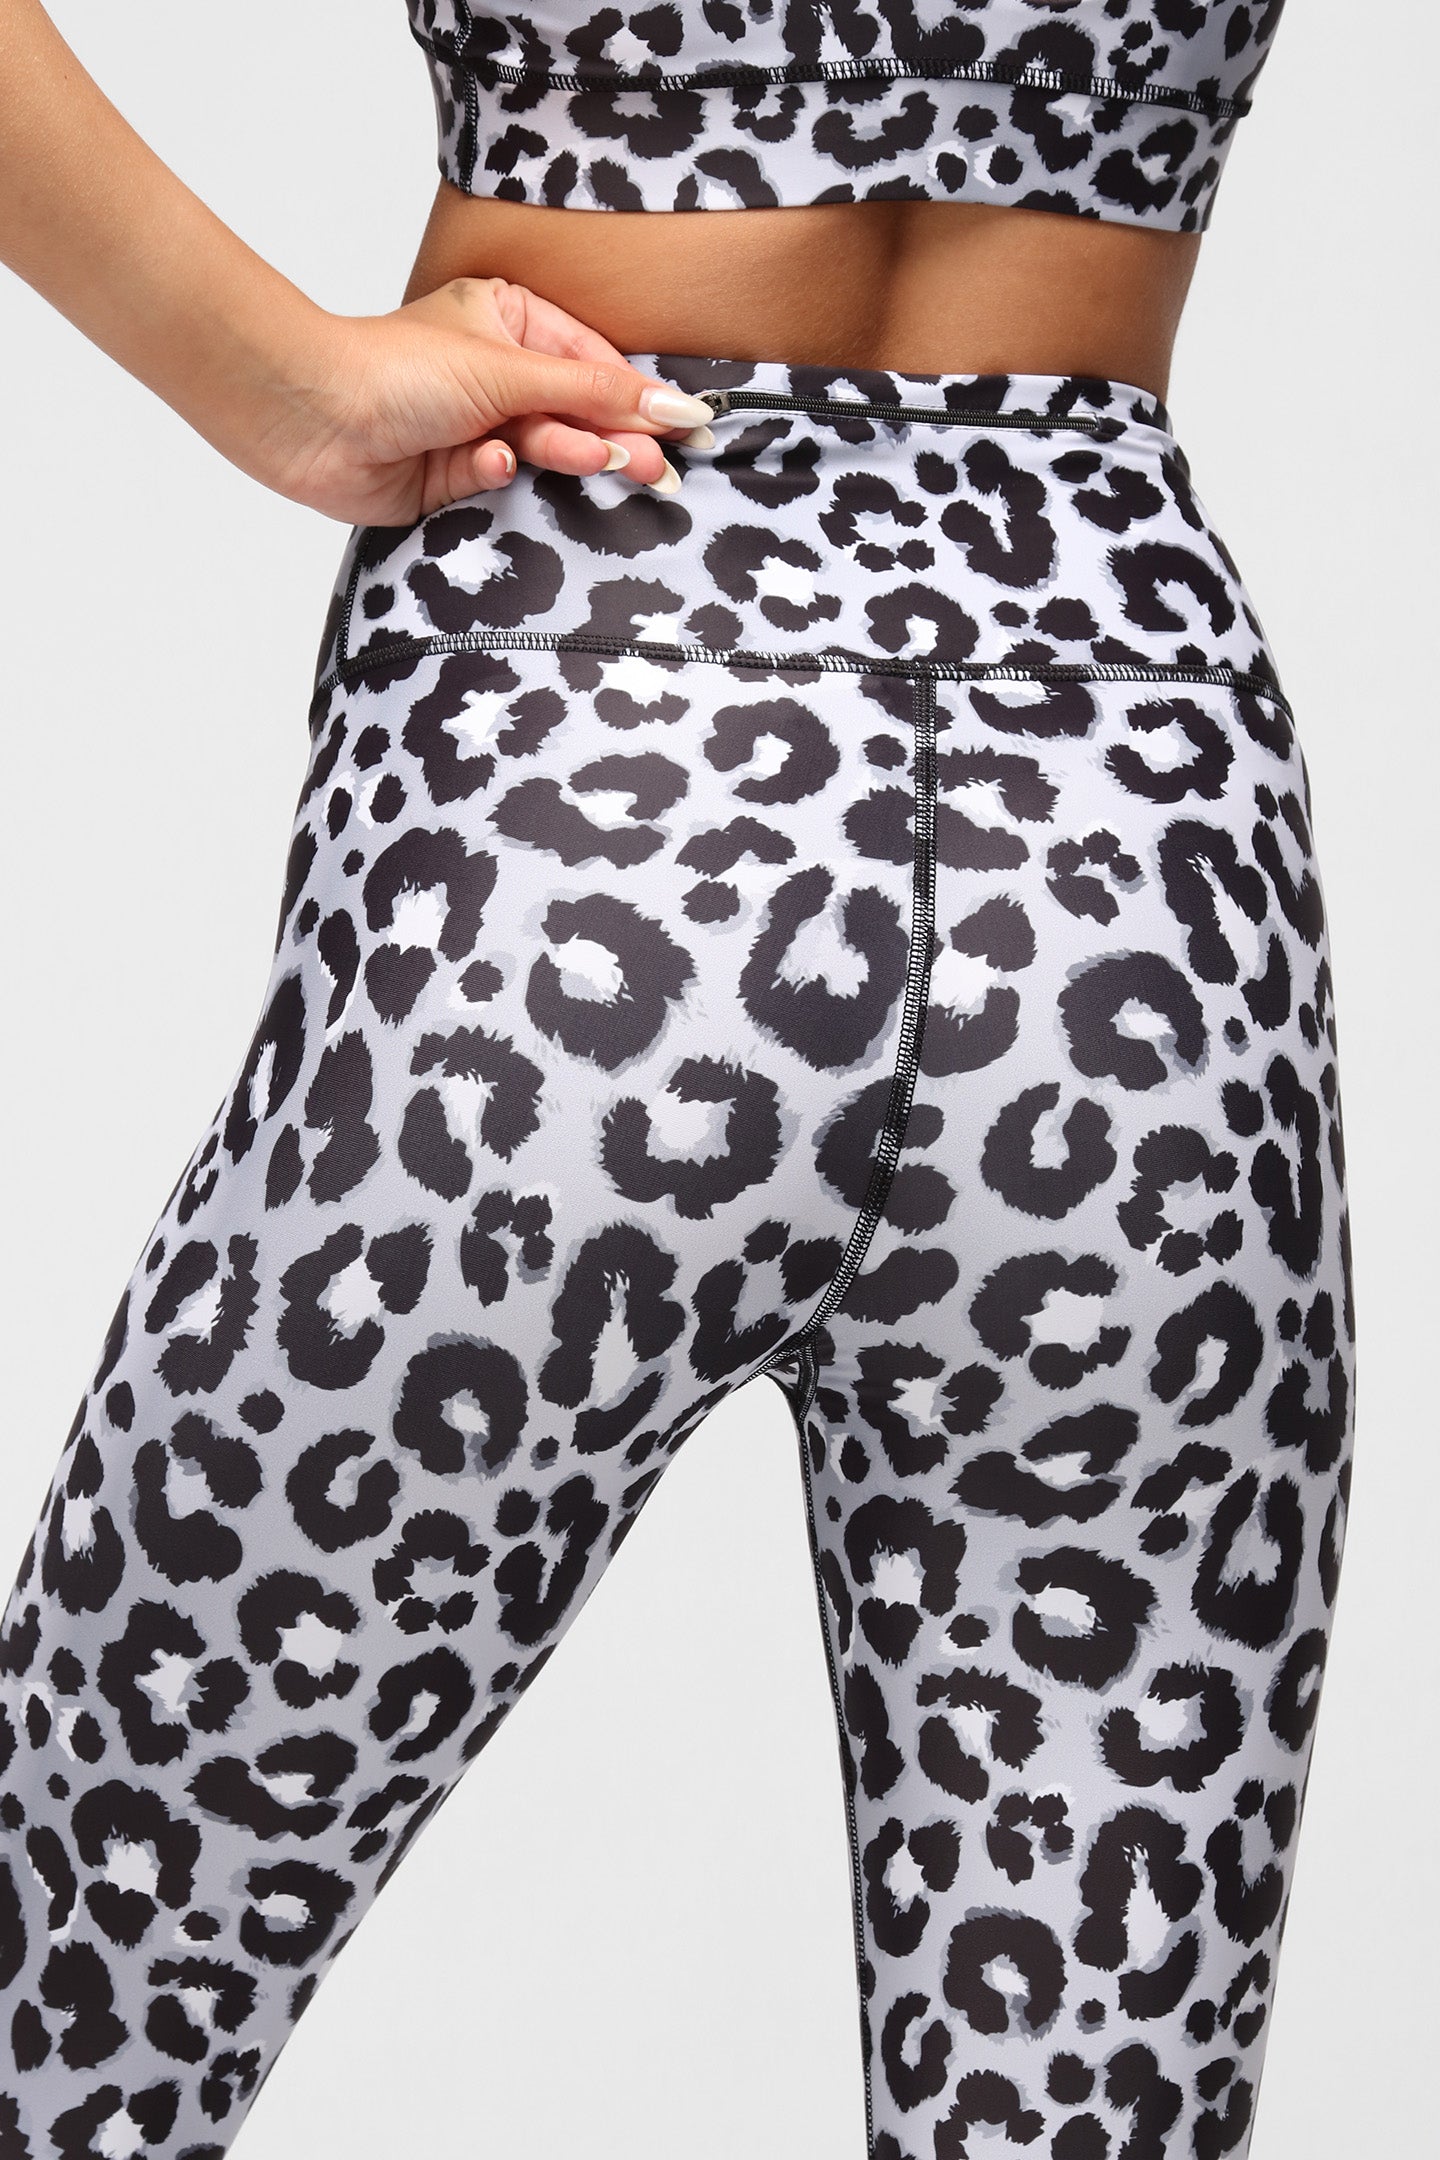 Quest New Womens Small Leggings Animal Print Cheetah Gray Black